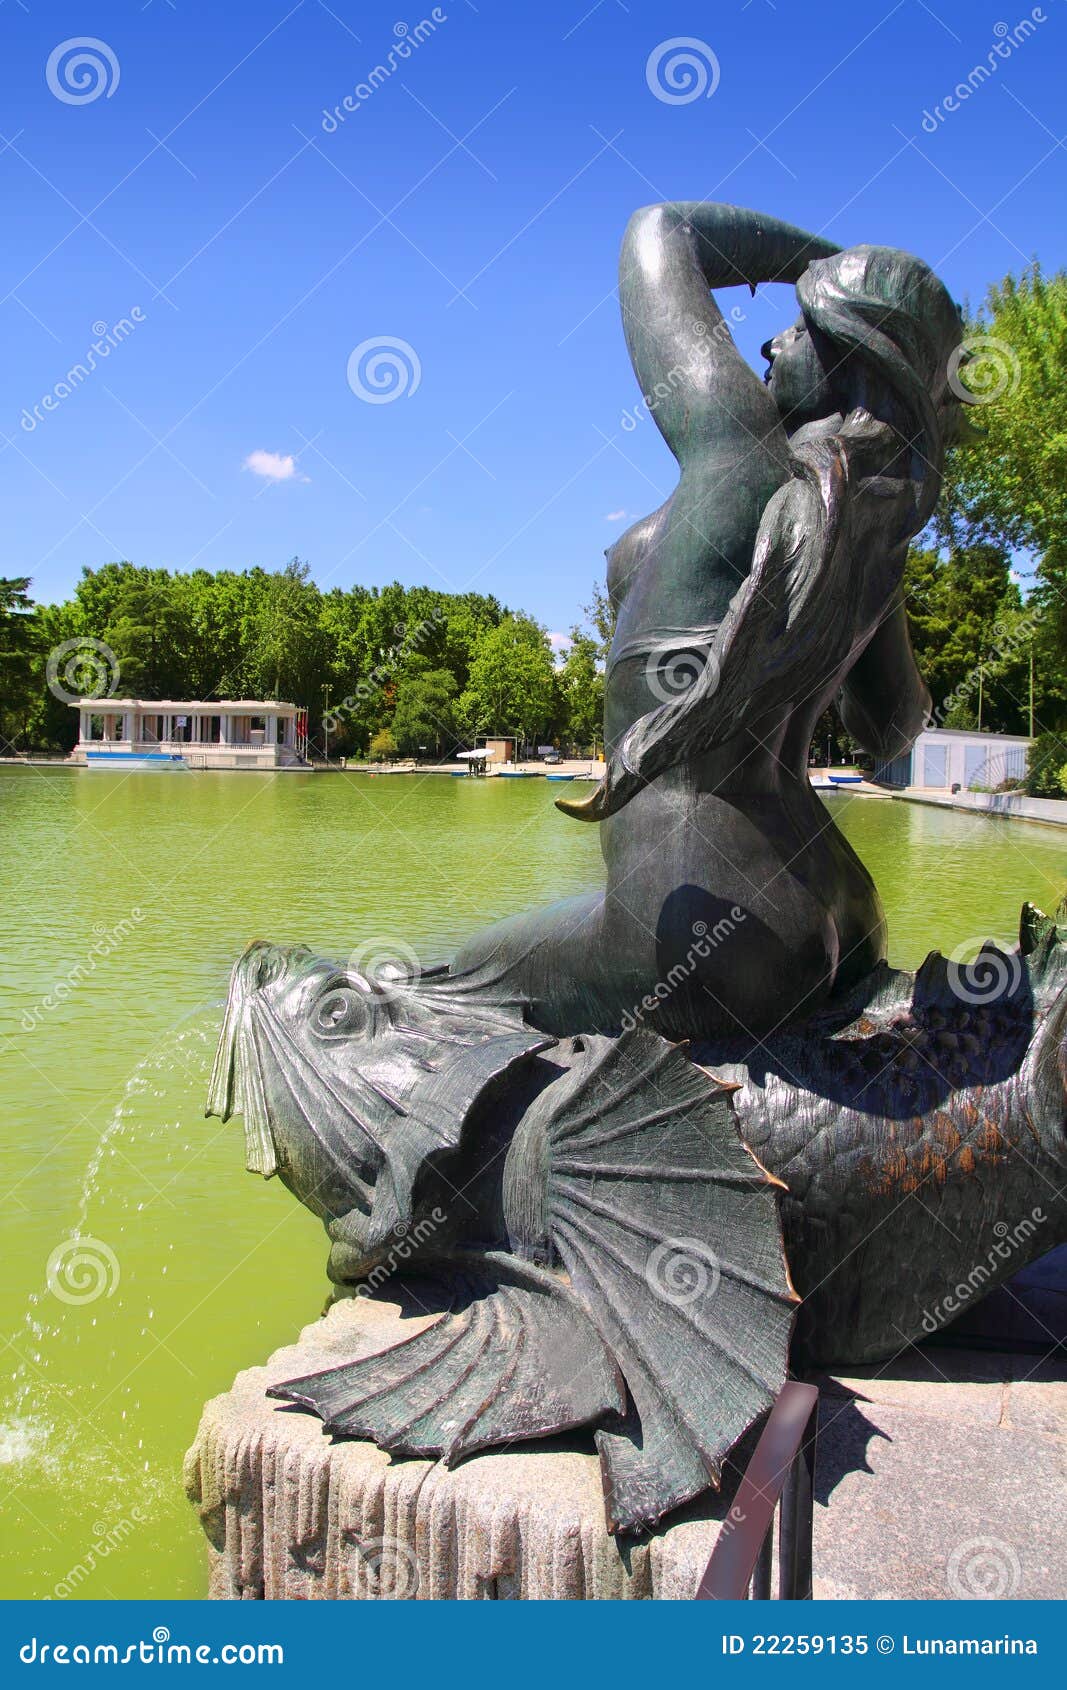 madrid sirena sobre pez mermaid statue in retiro